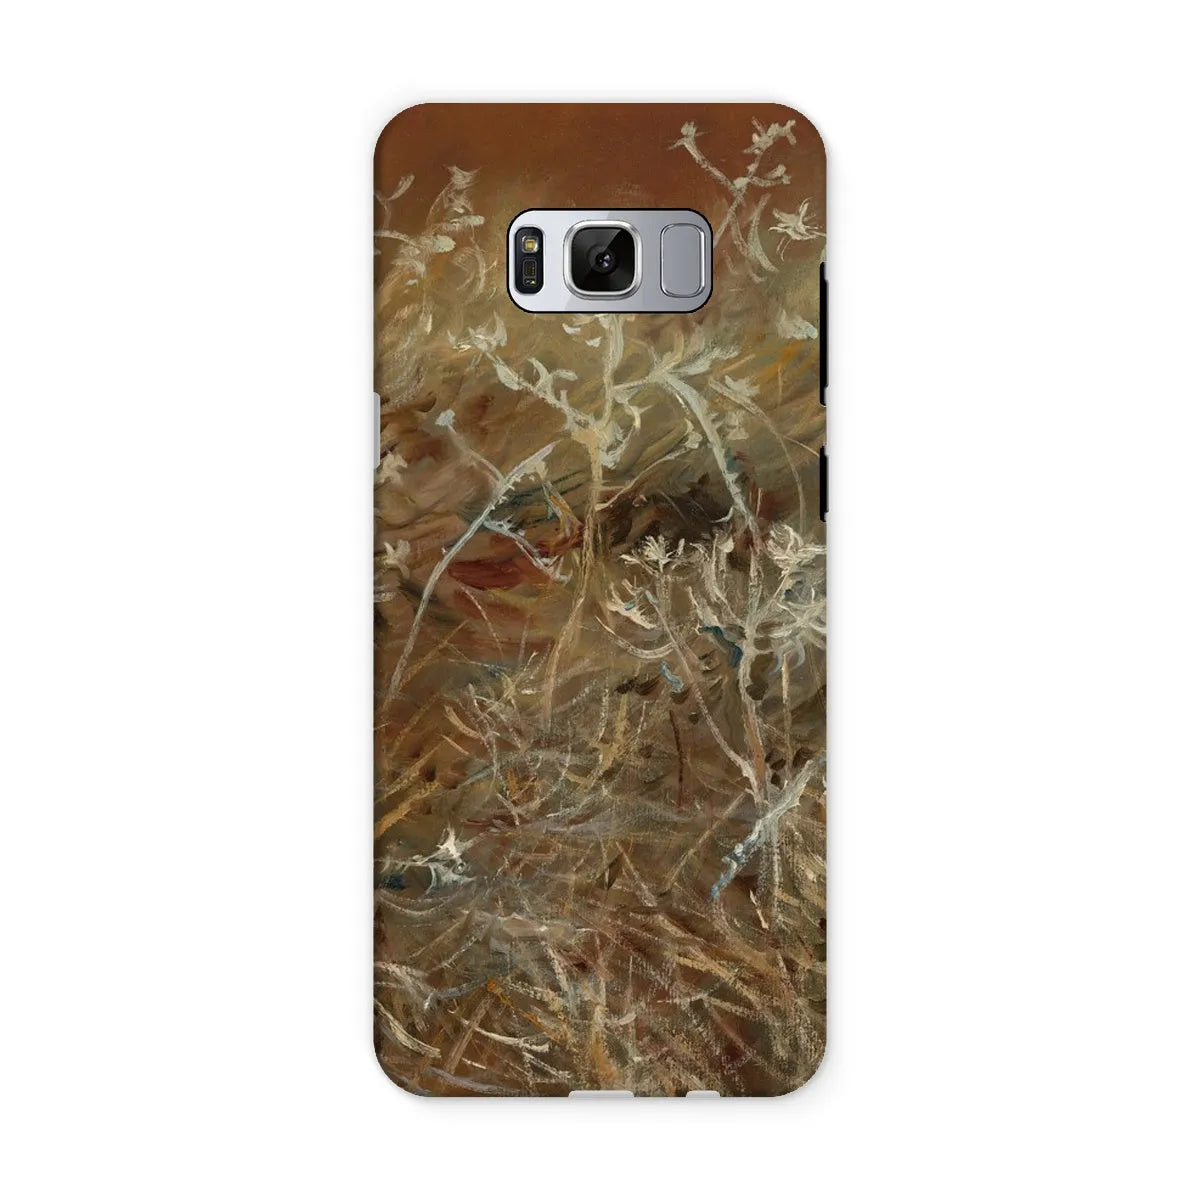 Thistles - Impressionism Art Phone Case - John Singer Sargent - Samsung Galaxy S8 / Matte - Mobile Phone Cases